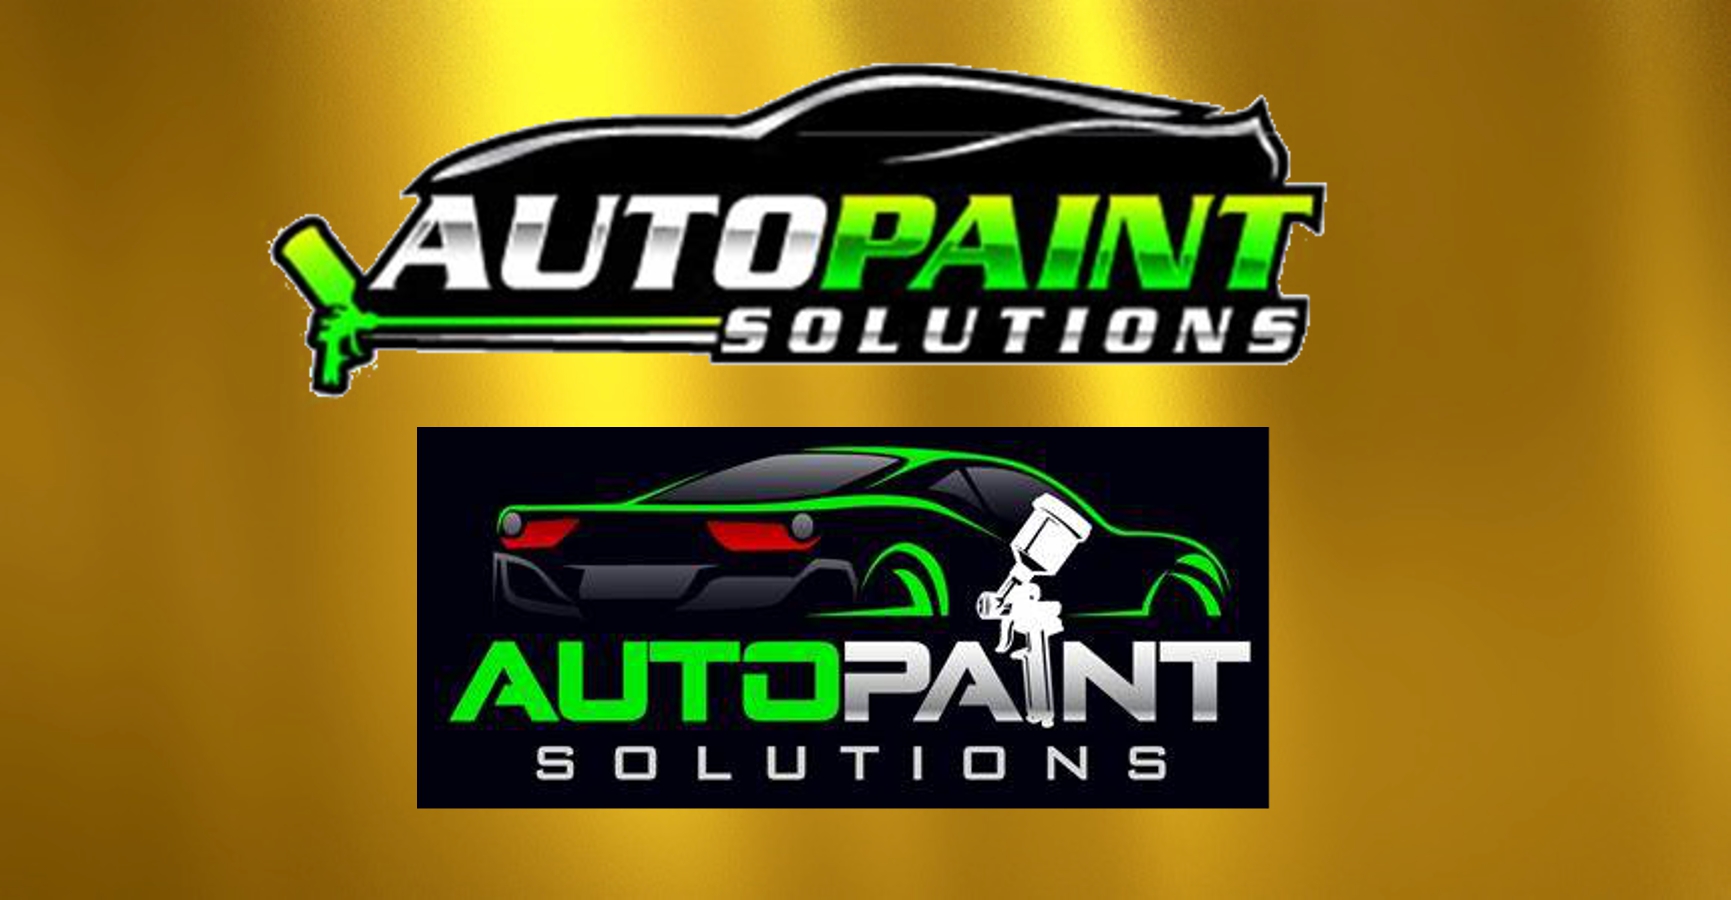 Auto Paint solutions logo.jpg